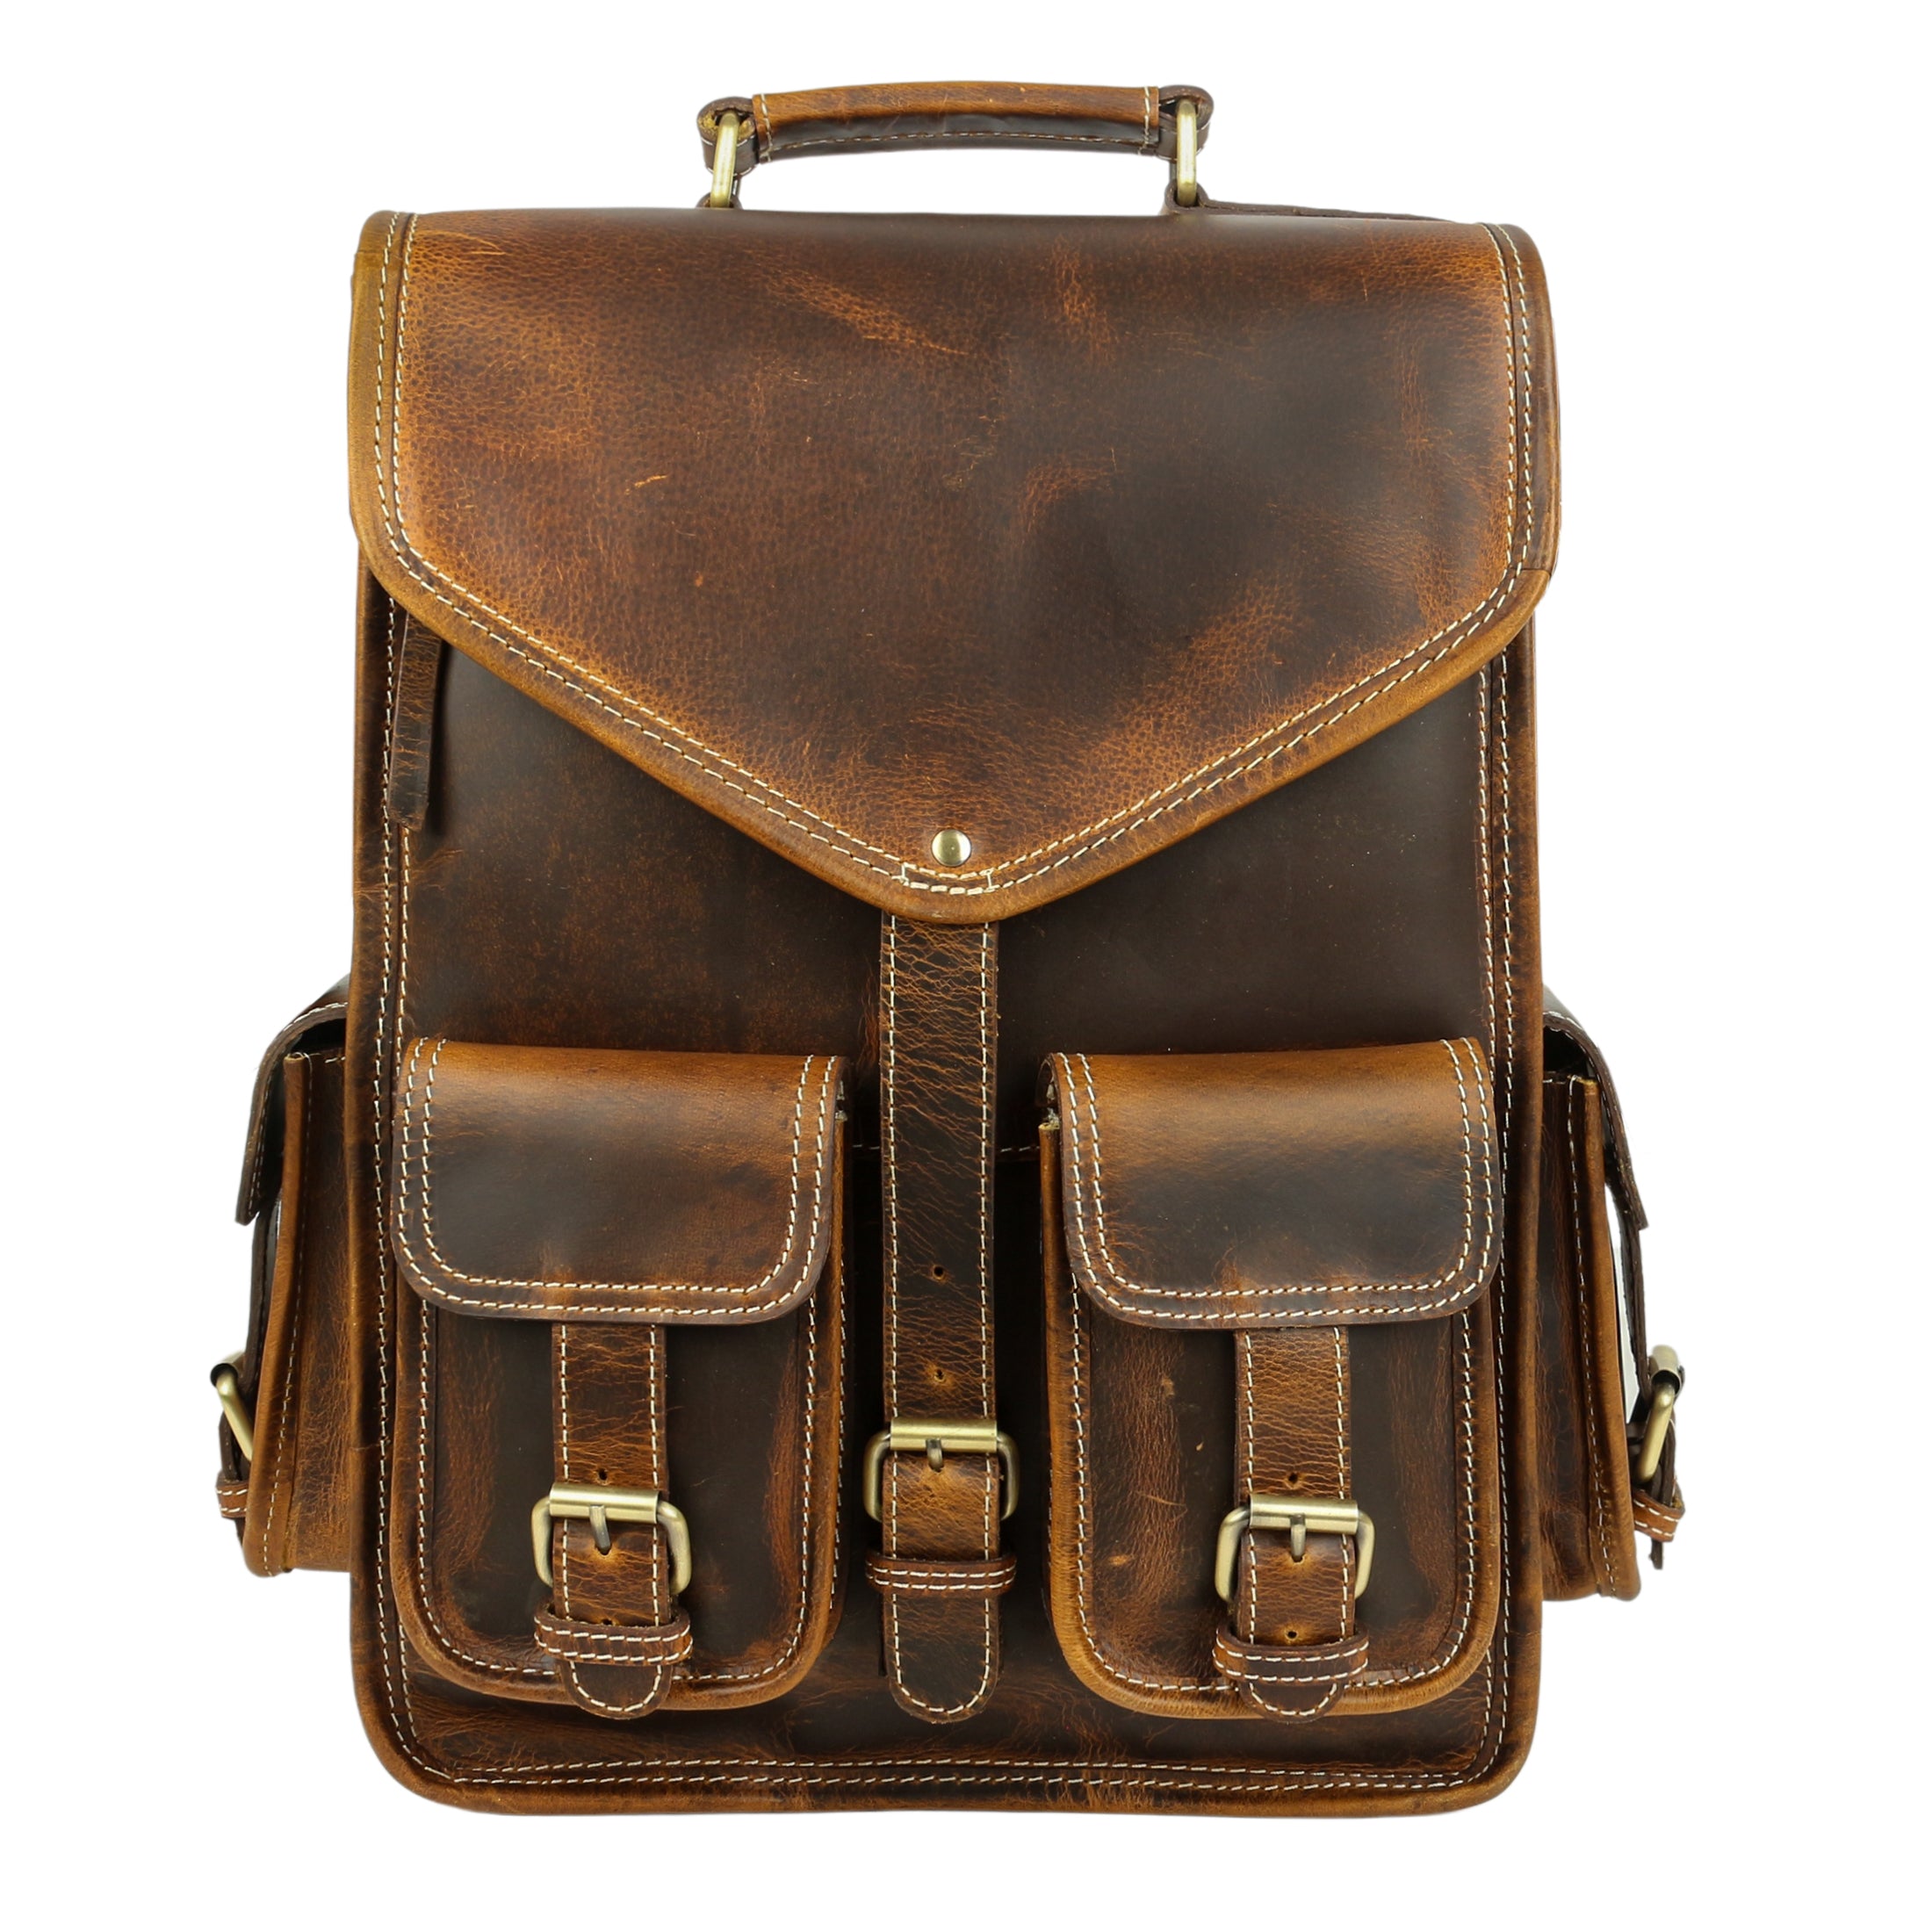 KomalC 18 Inch Leather briefcase Laptop Messenger Bags for Men and Women  Best Office School College Satchel Bag (Messenger Bag)